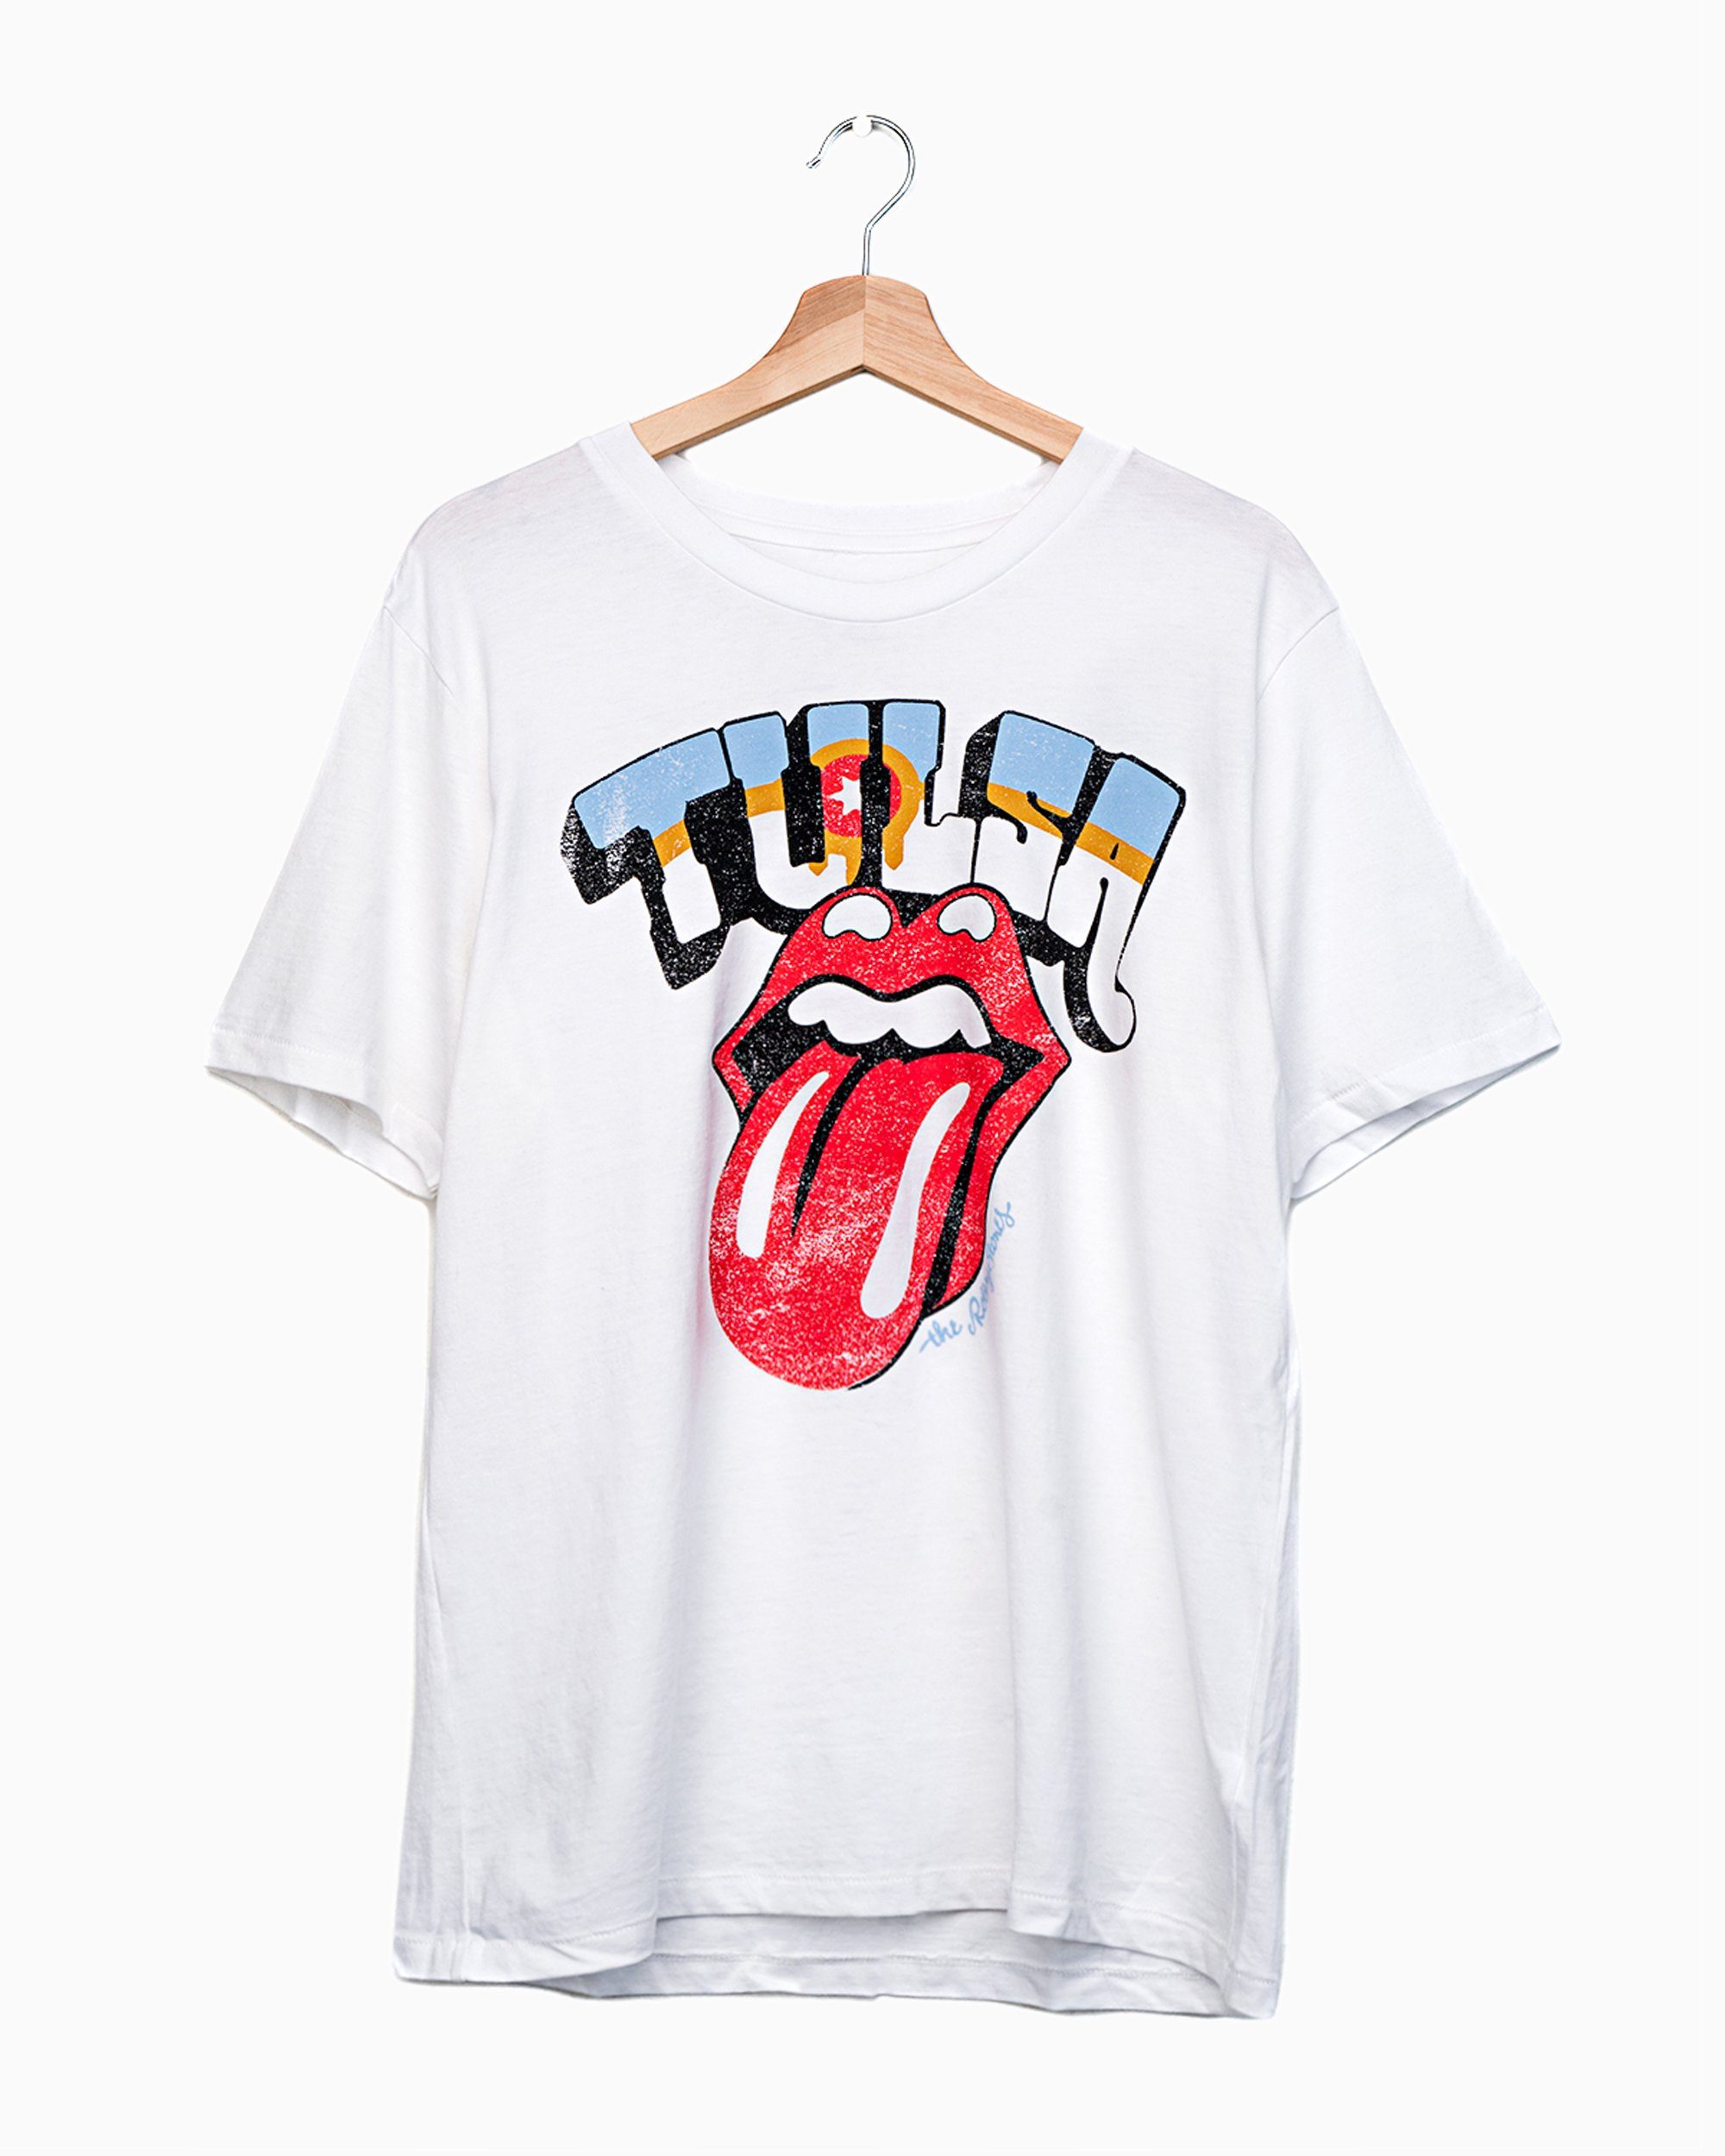 Rolling Stones Tulsa Flag Rocker White Tee (4462495203431)